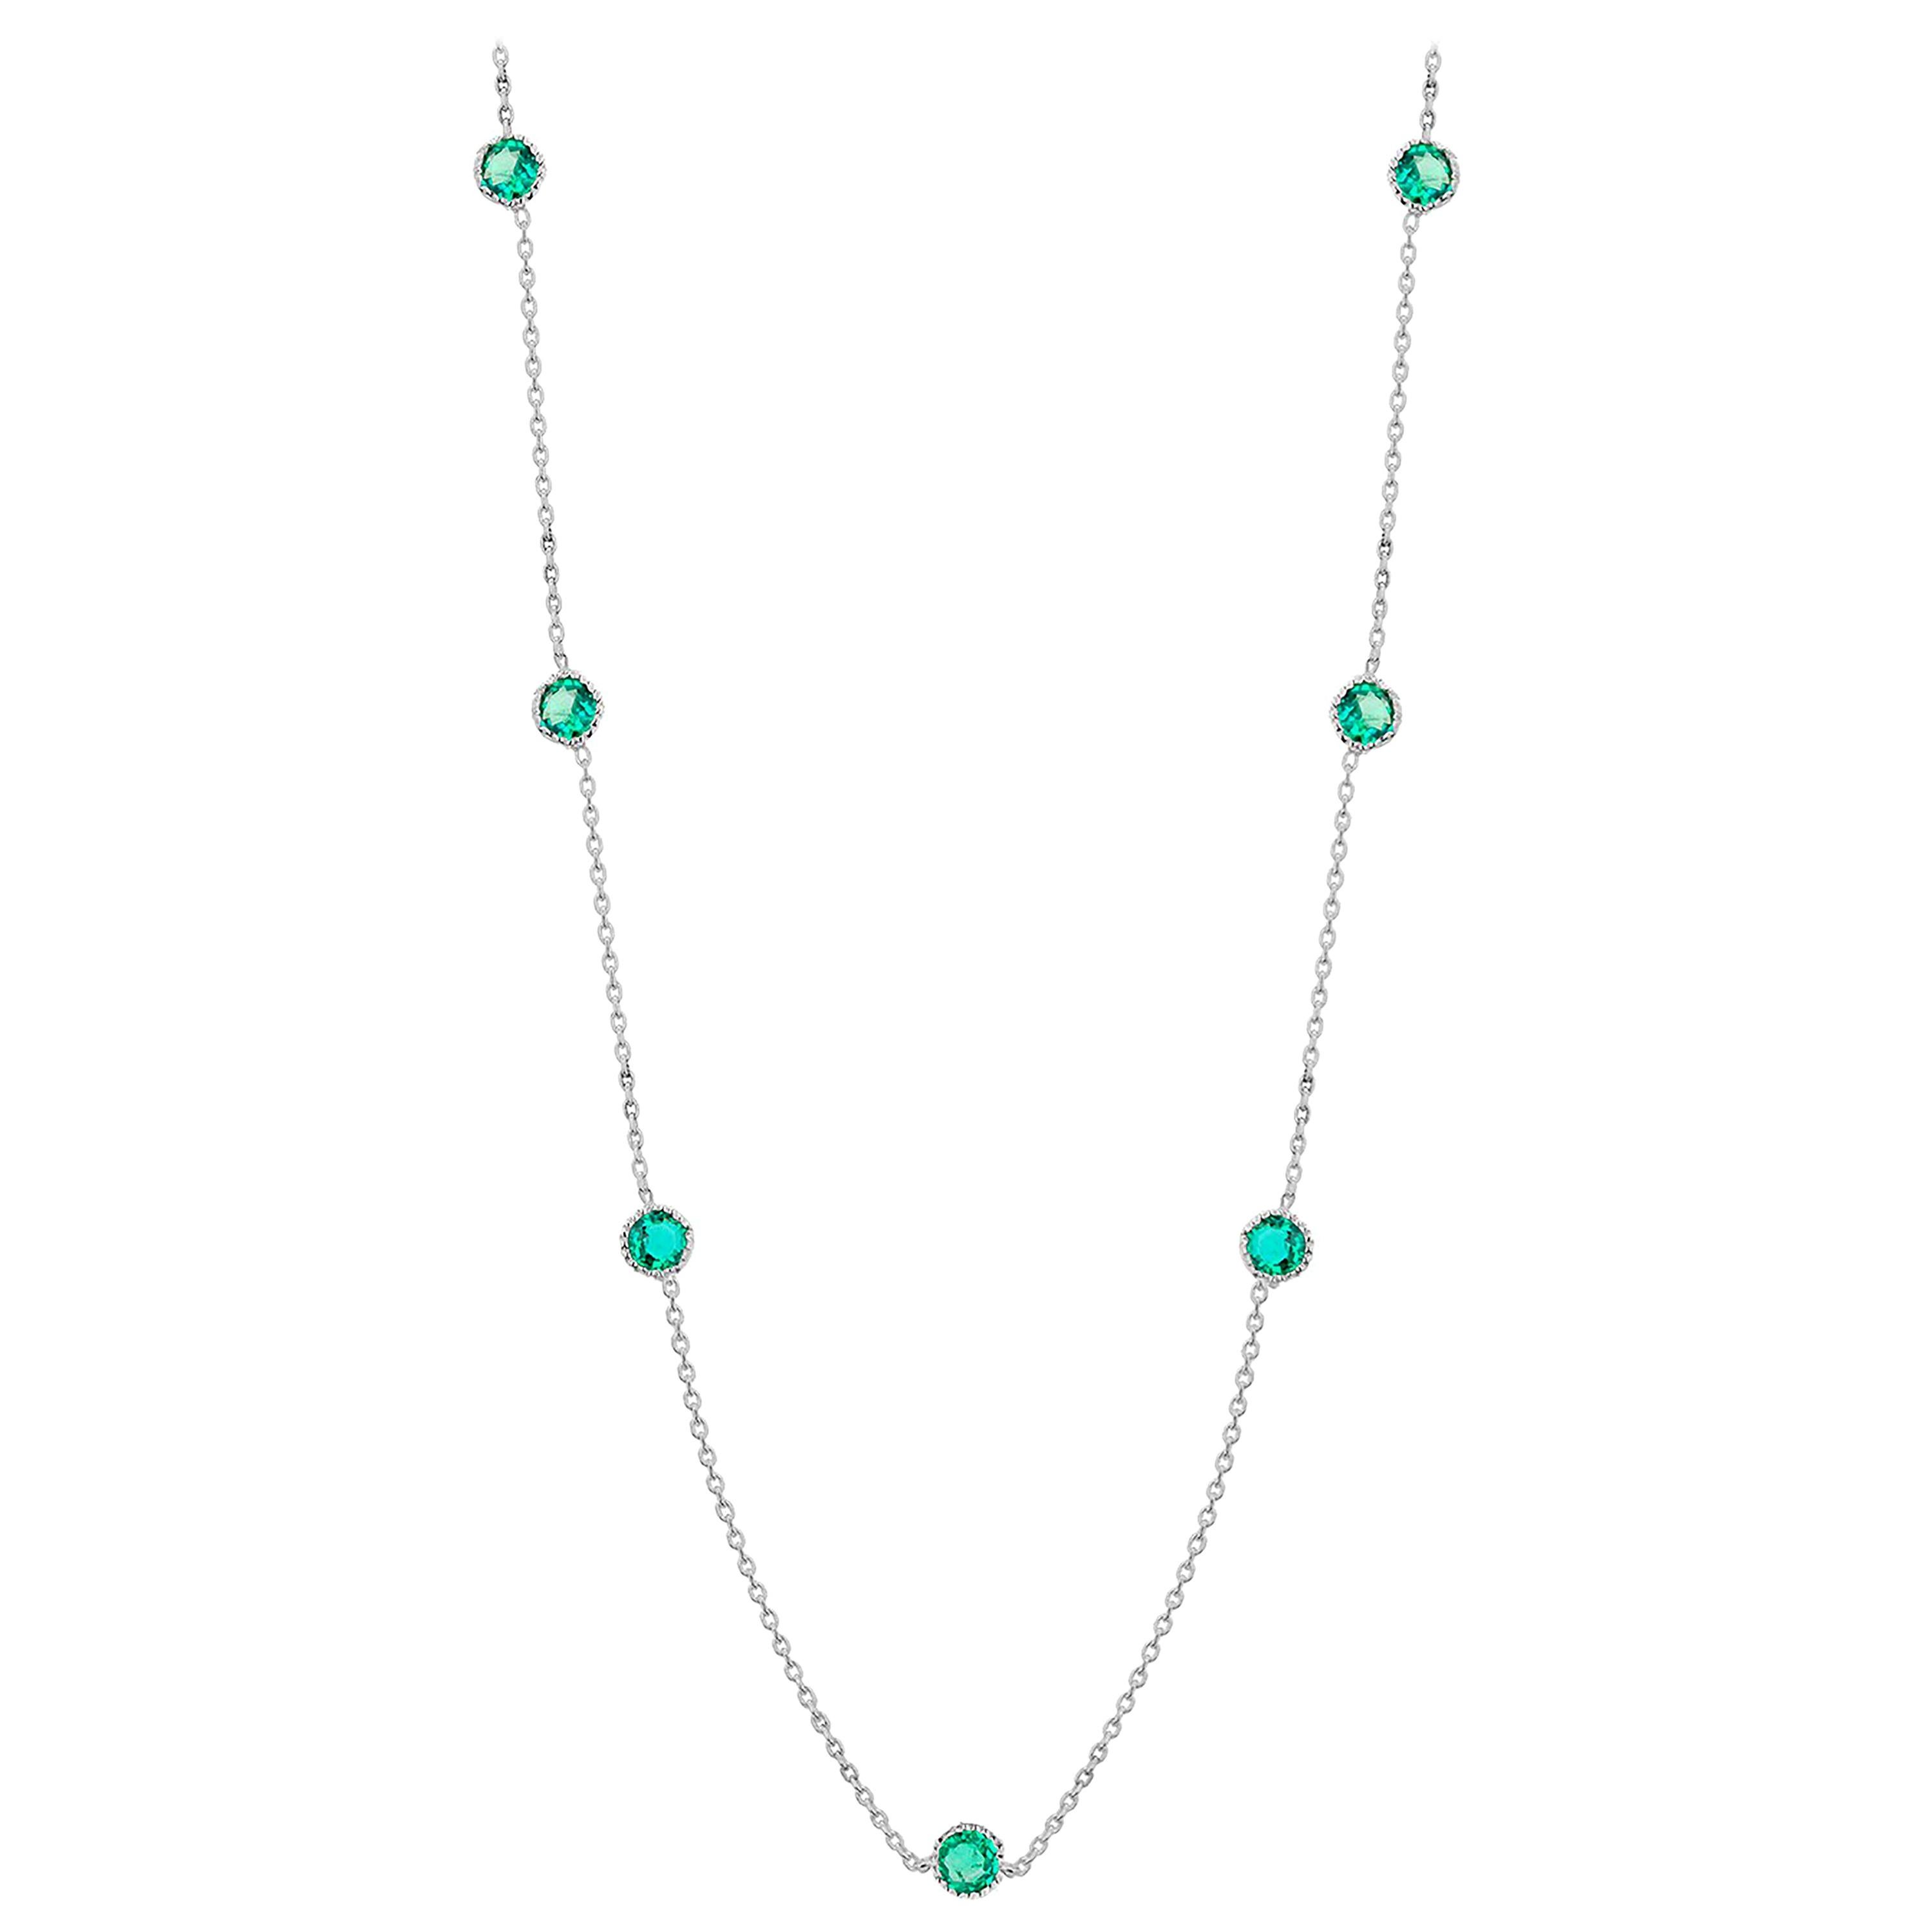 Seven Bezel-Set Round Emerald White Gold Necklace Weighing 1.05 Carat